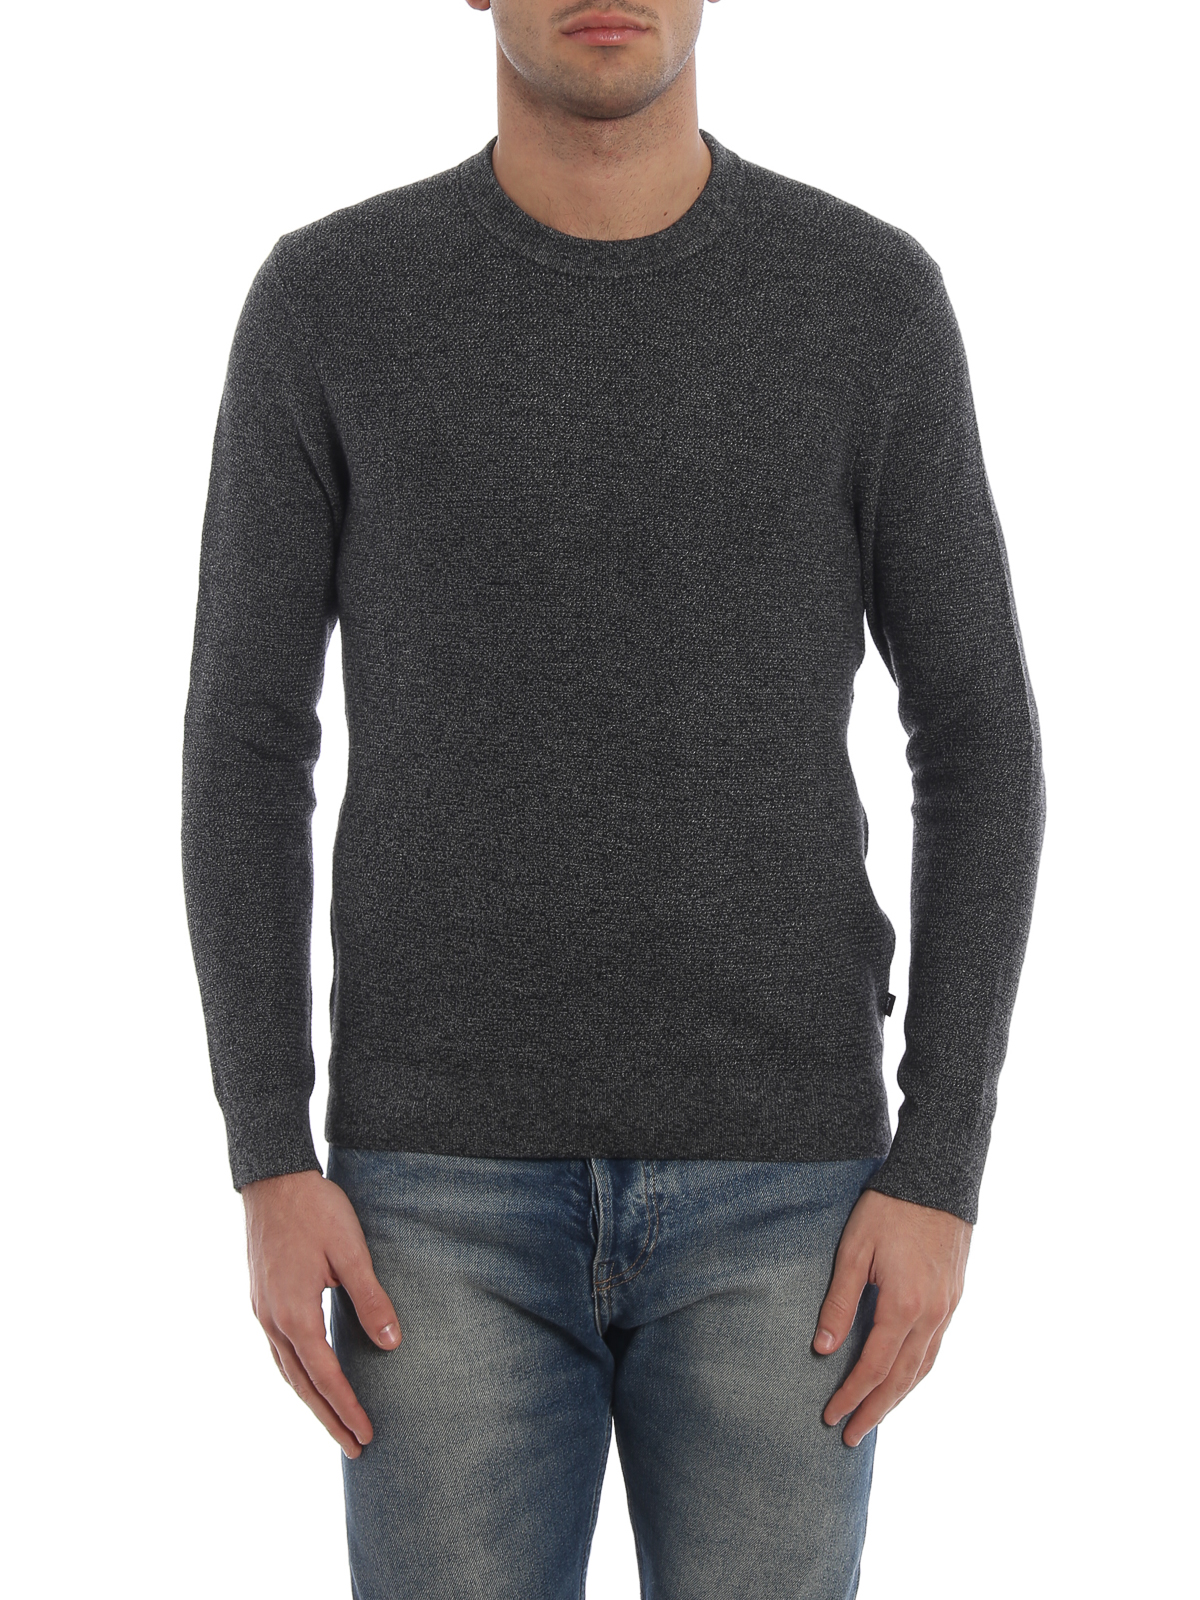 Crew necks Michael Kors - Ash grey soft cotton and wool sweater -  CF86KHGD5DD078